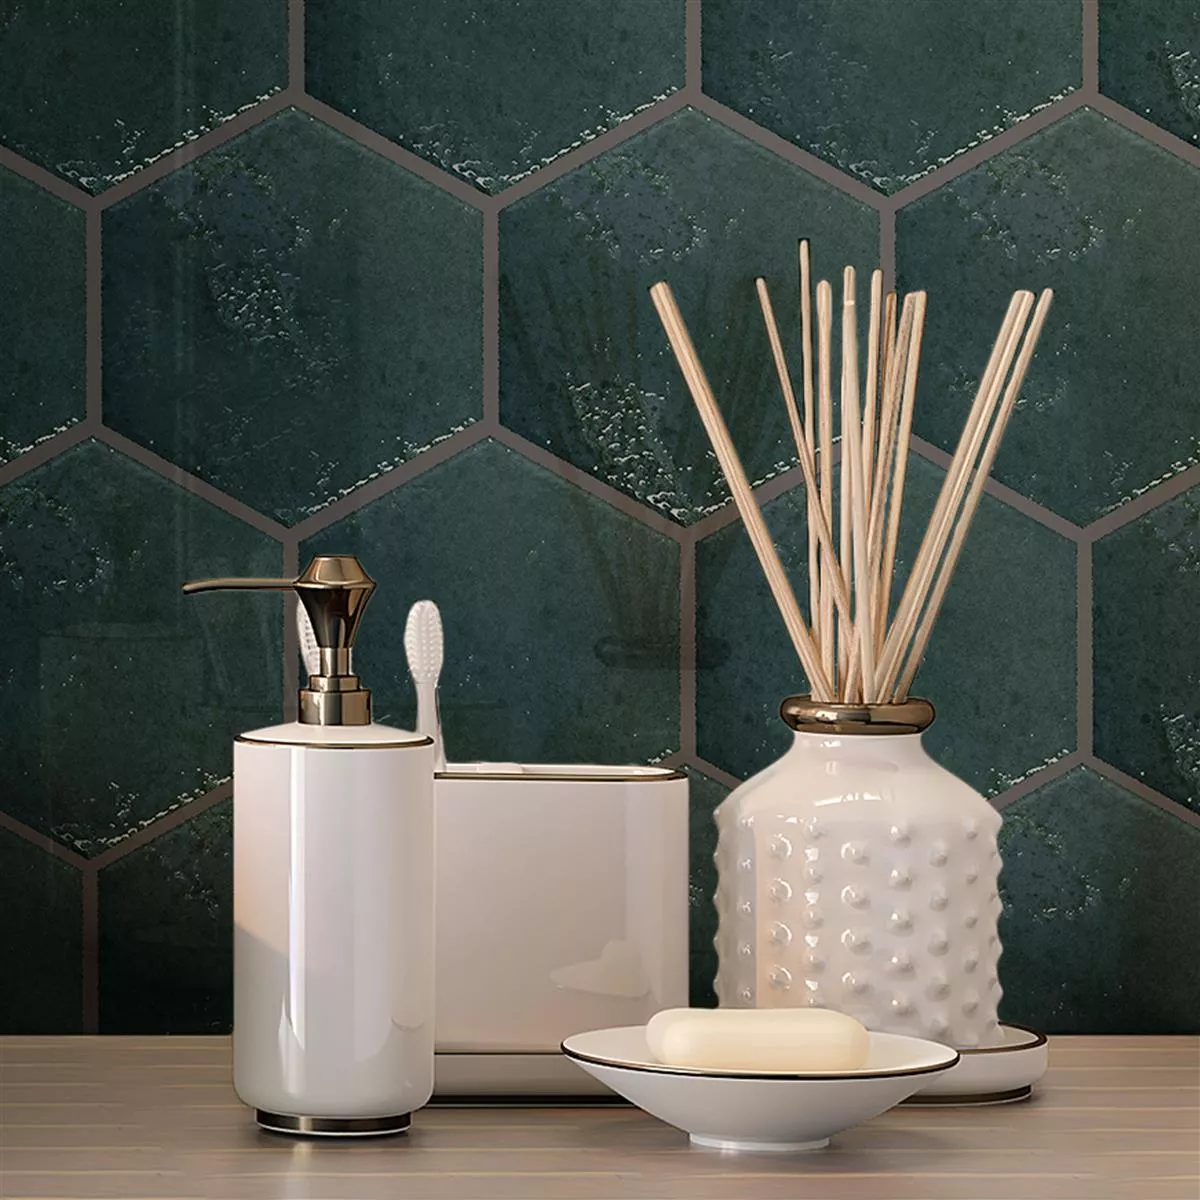 Wall Tiles Lara Glossy Waved 13x15cm Hexagon Green